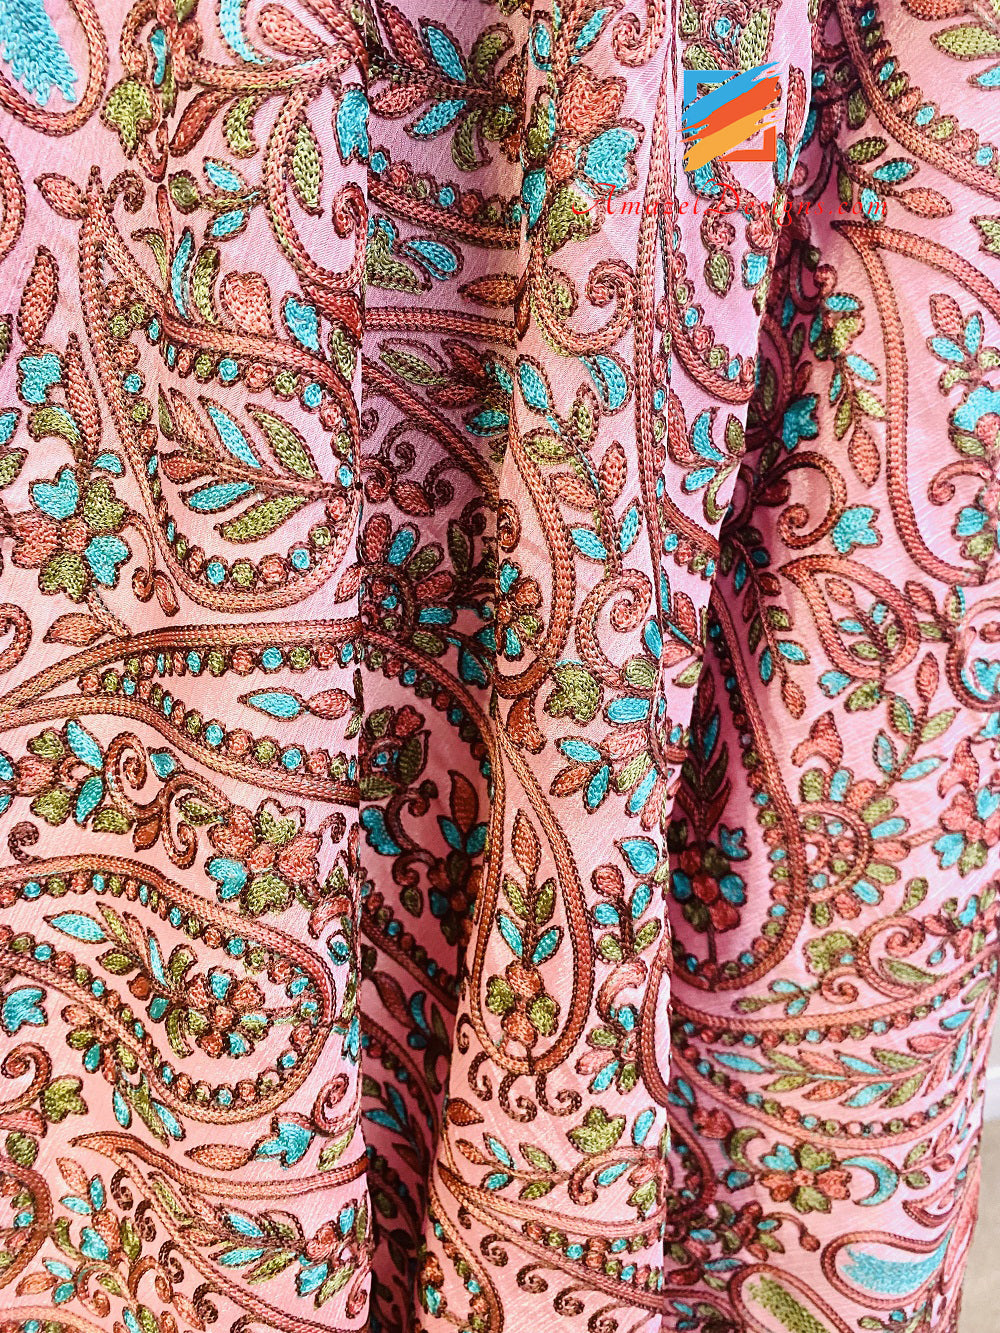 Pinkish Fine Chain Embroidery All Over Ambiya Duppatta Shawl